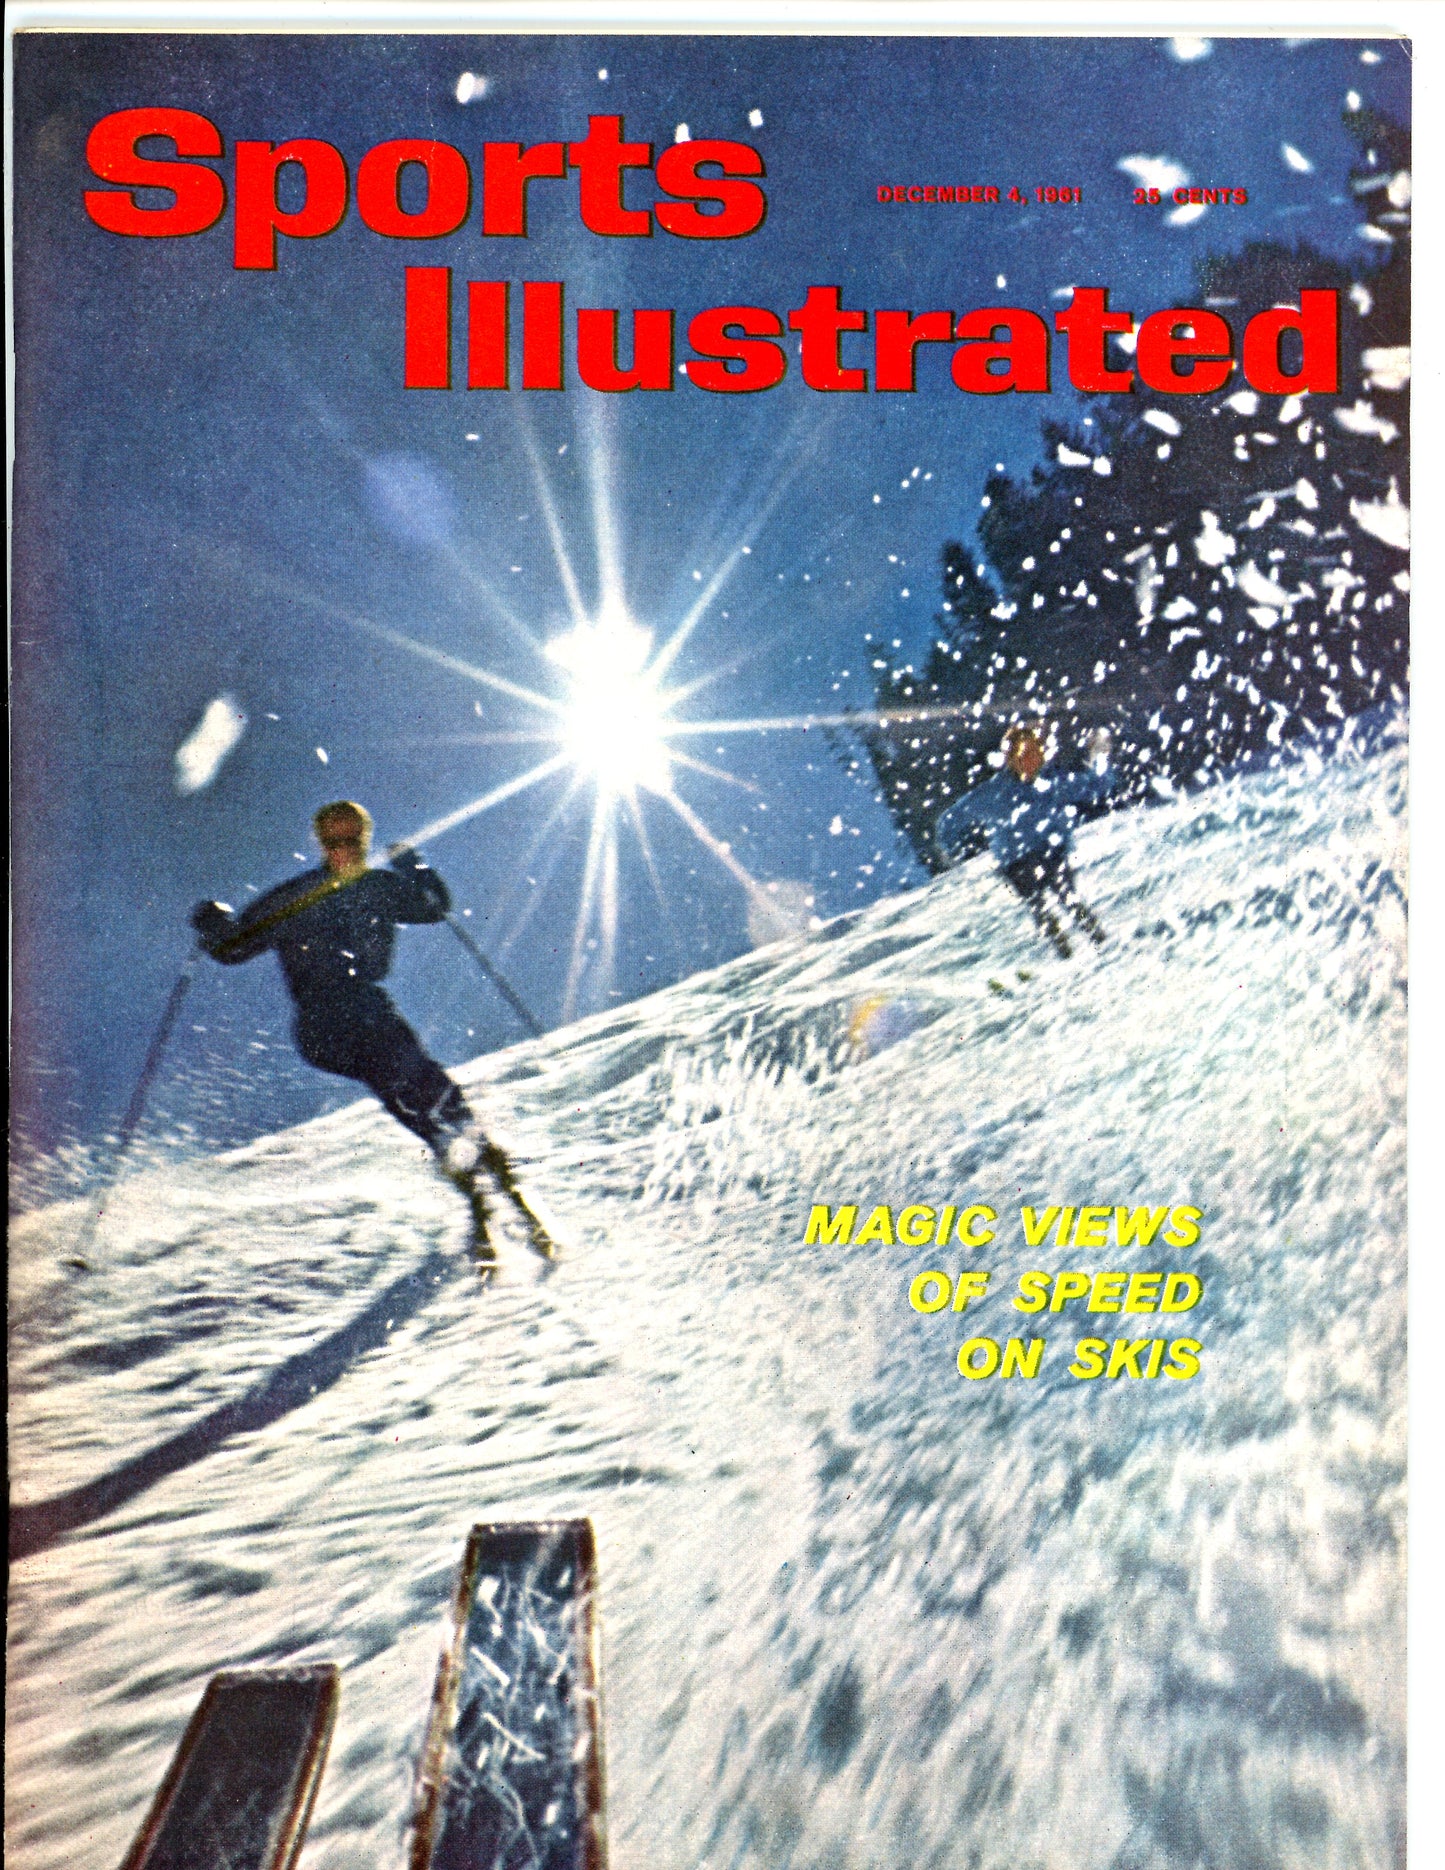 Sports Illustrated Vintage Magazine Rare Newsstand Edition (December 4, 1961) Skiing